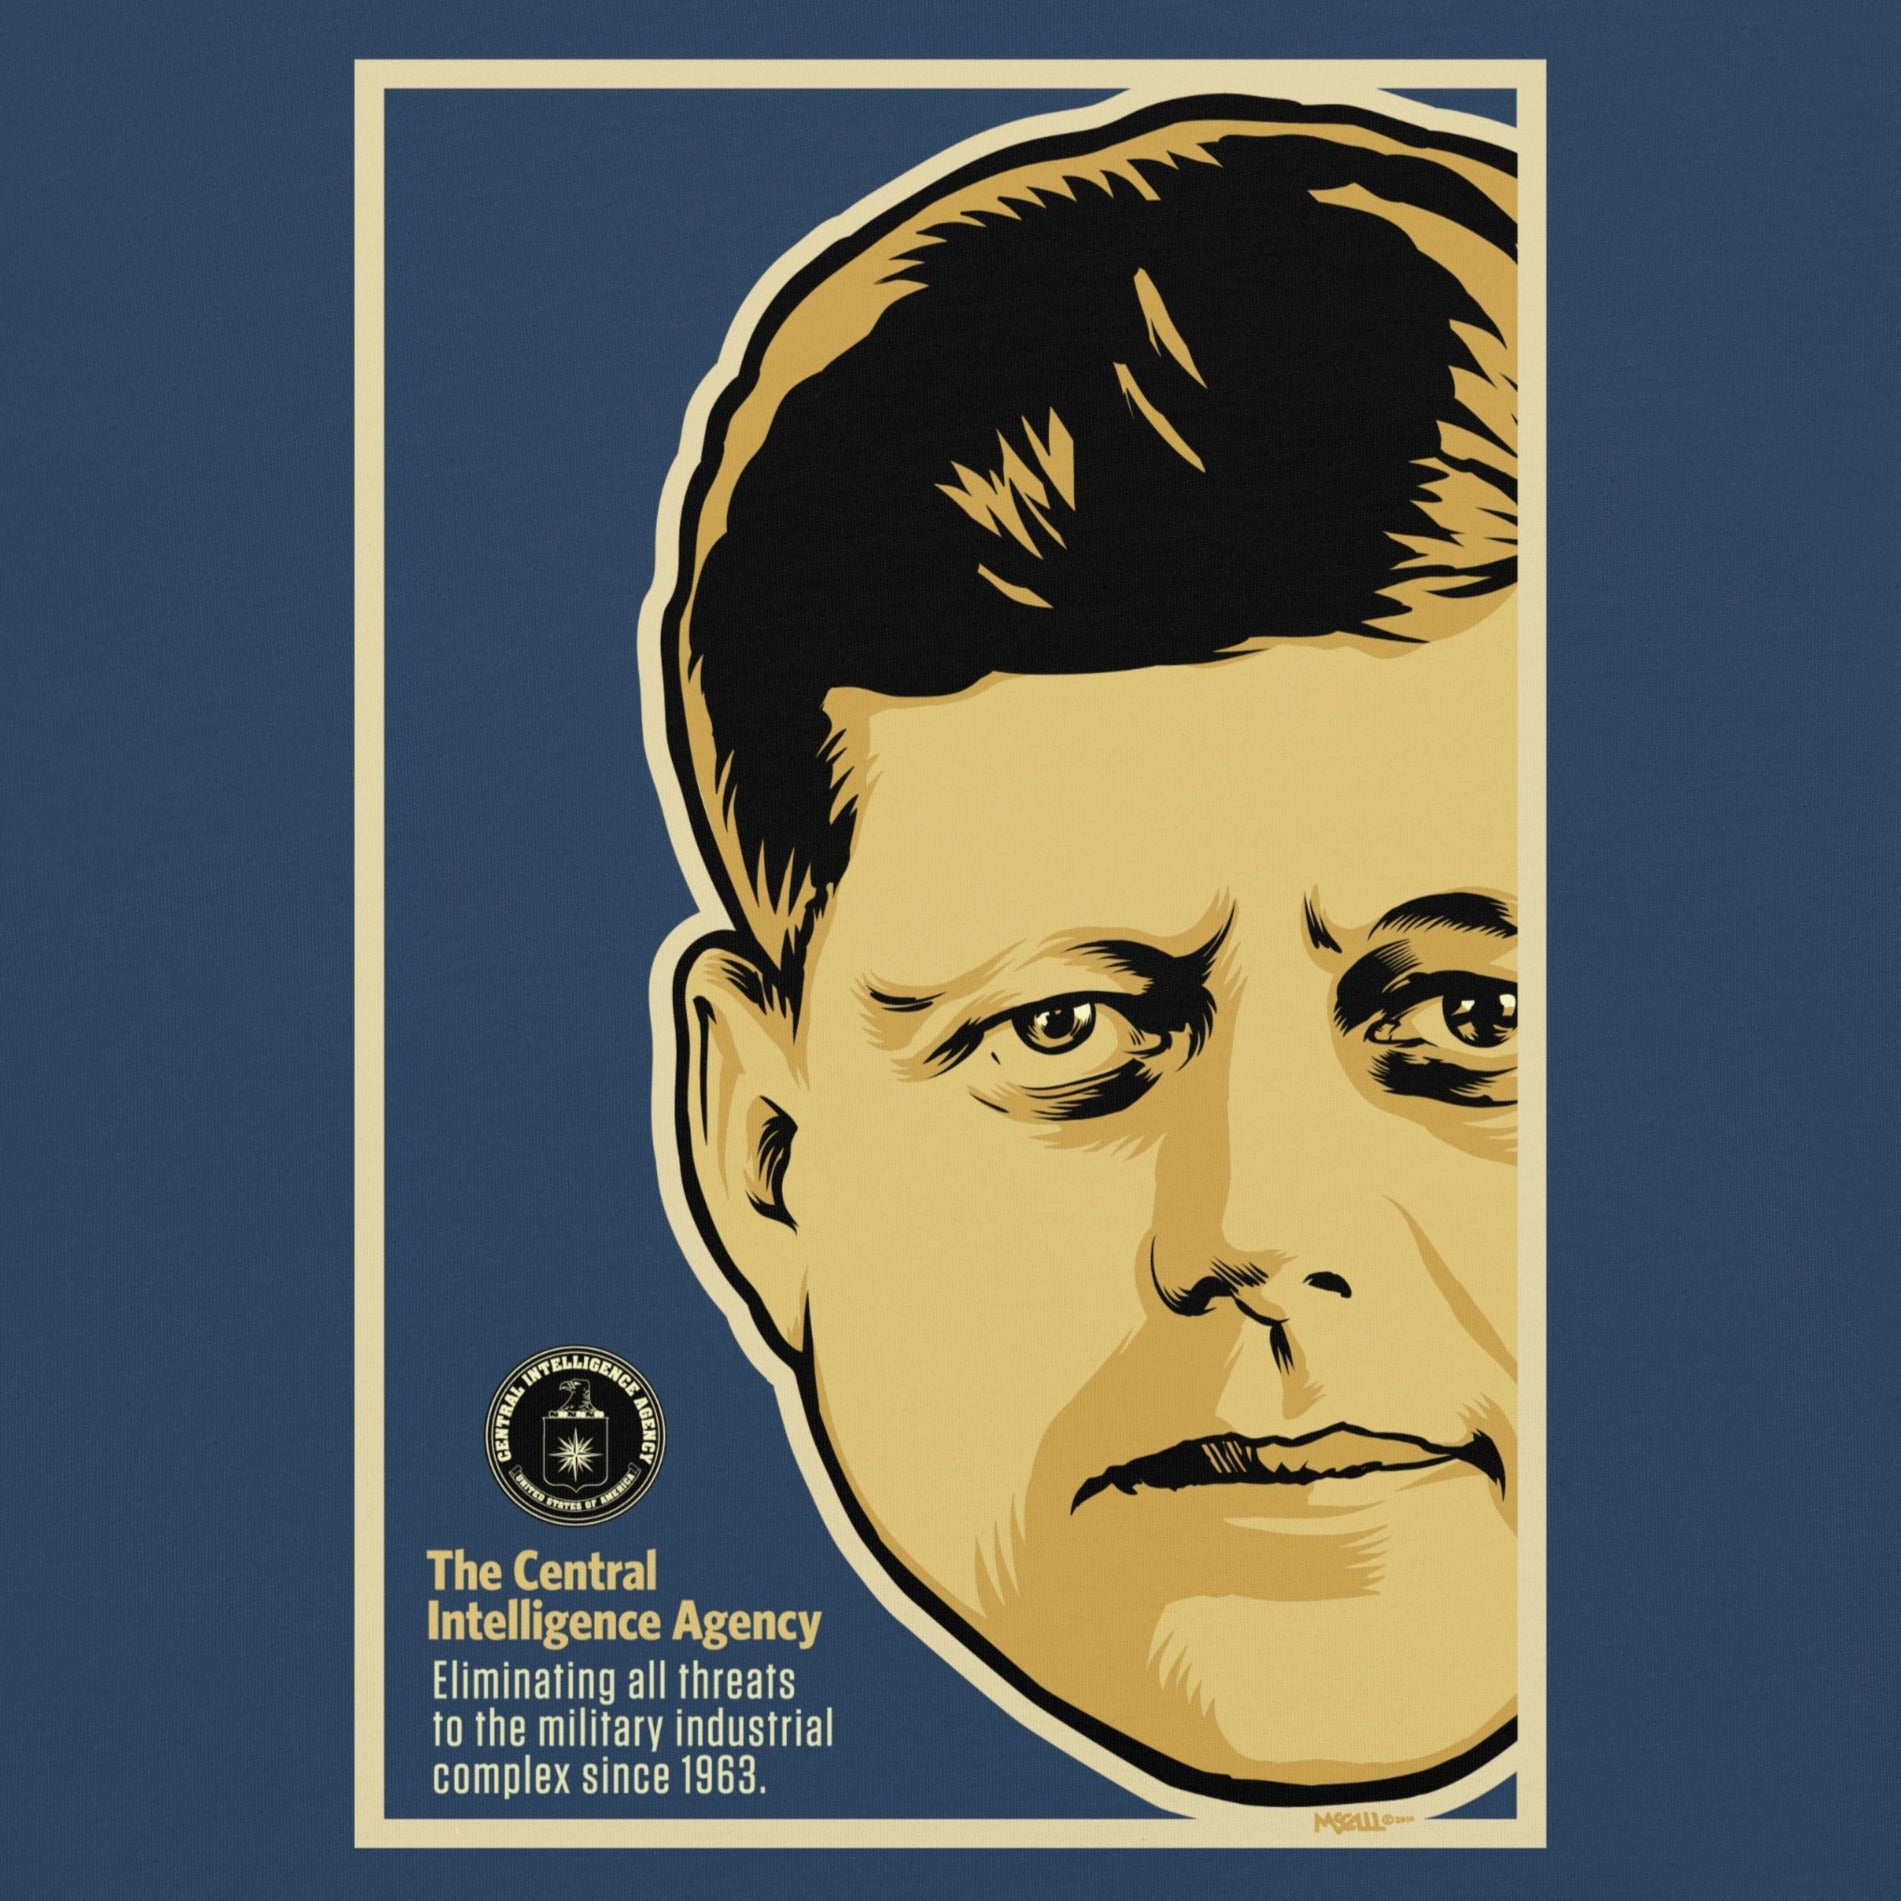 JFK CIA Garment-dyed Heavyweight T-shirt